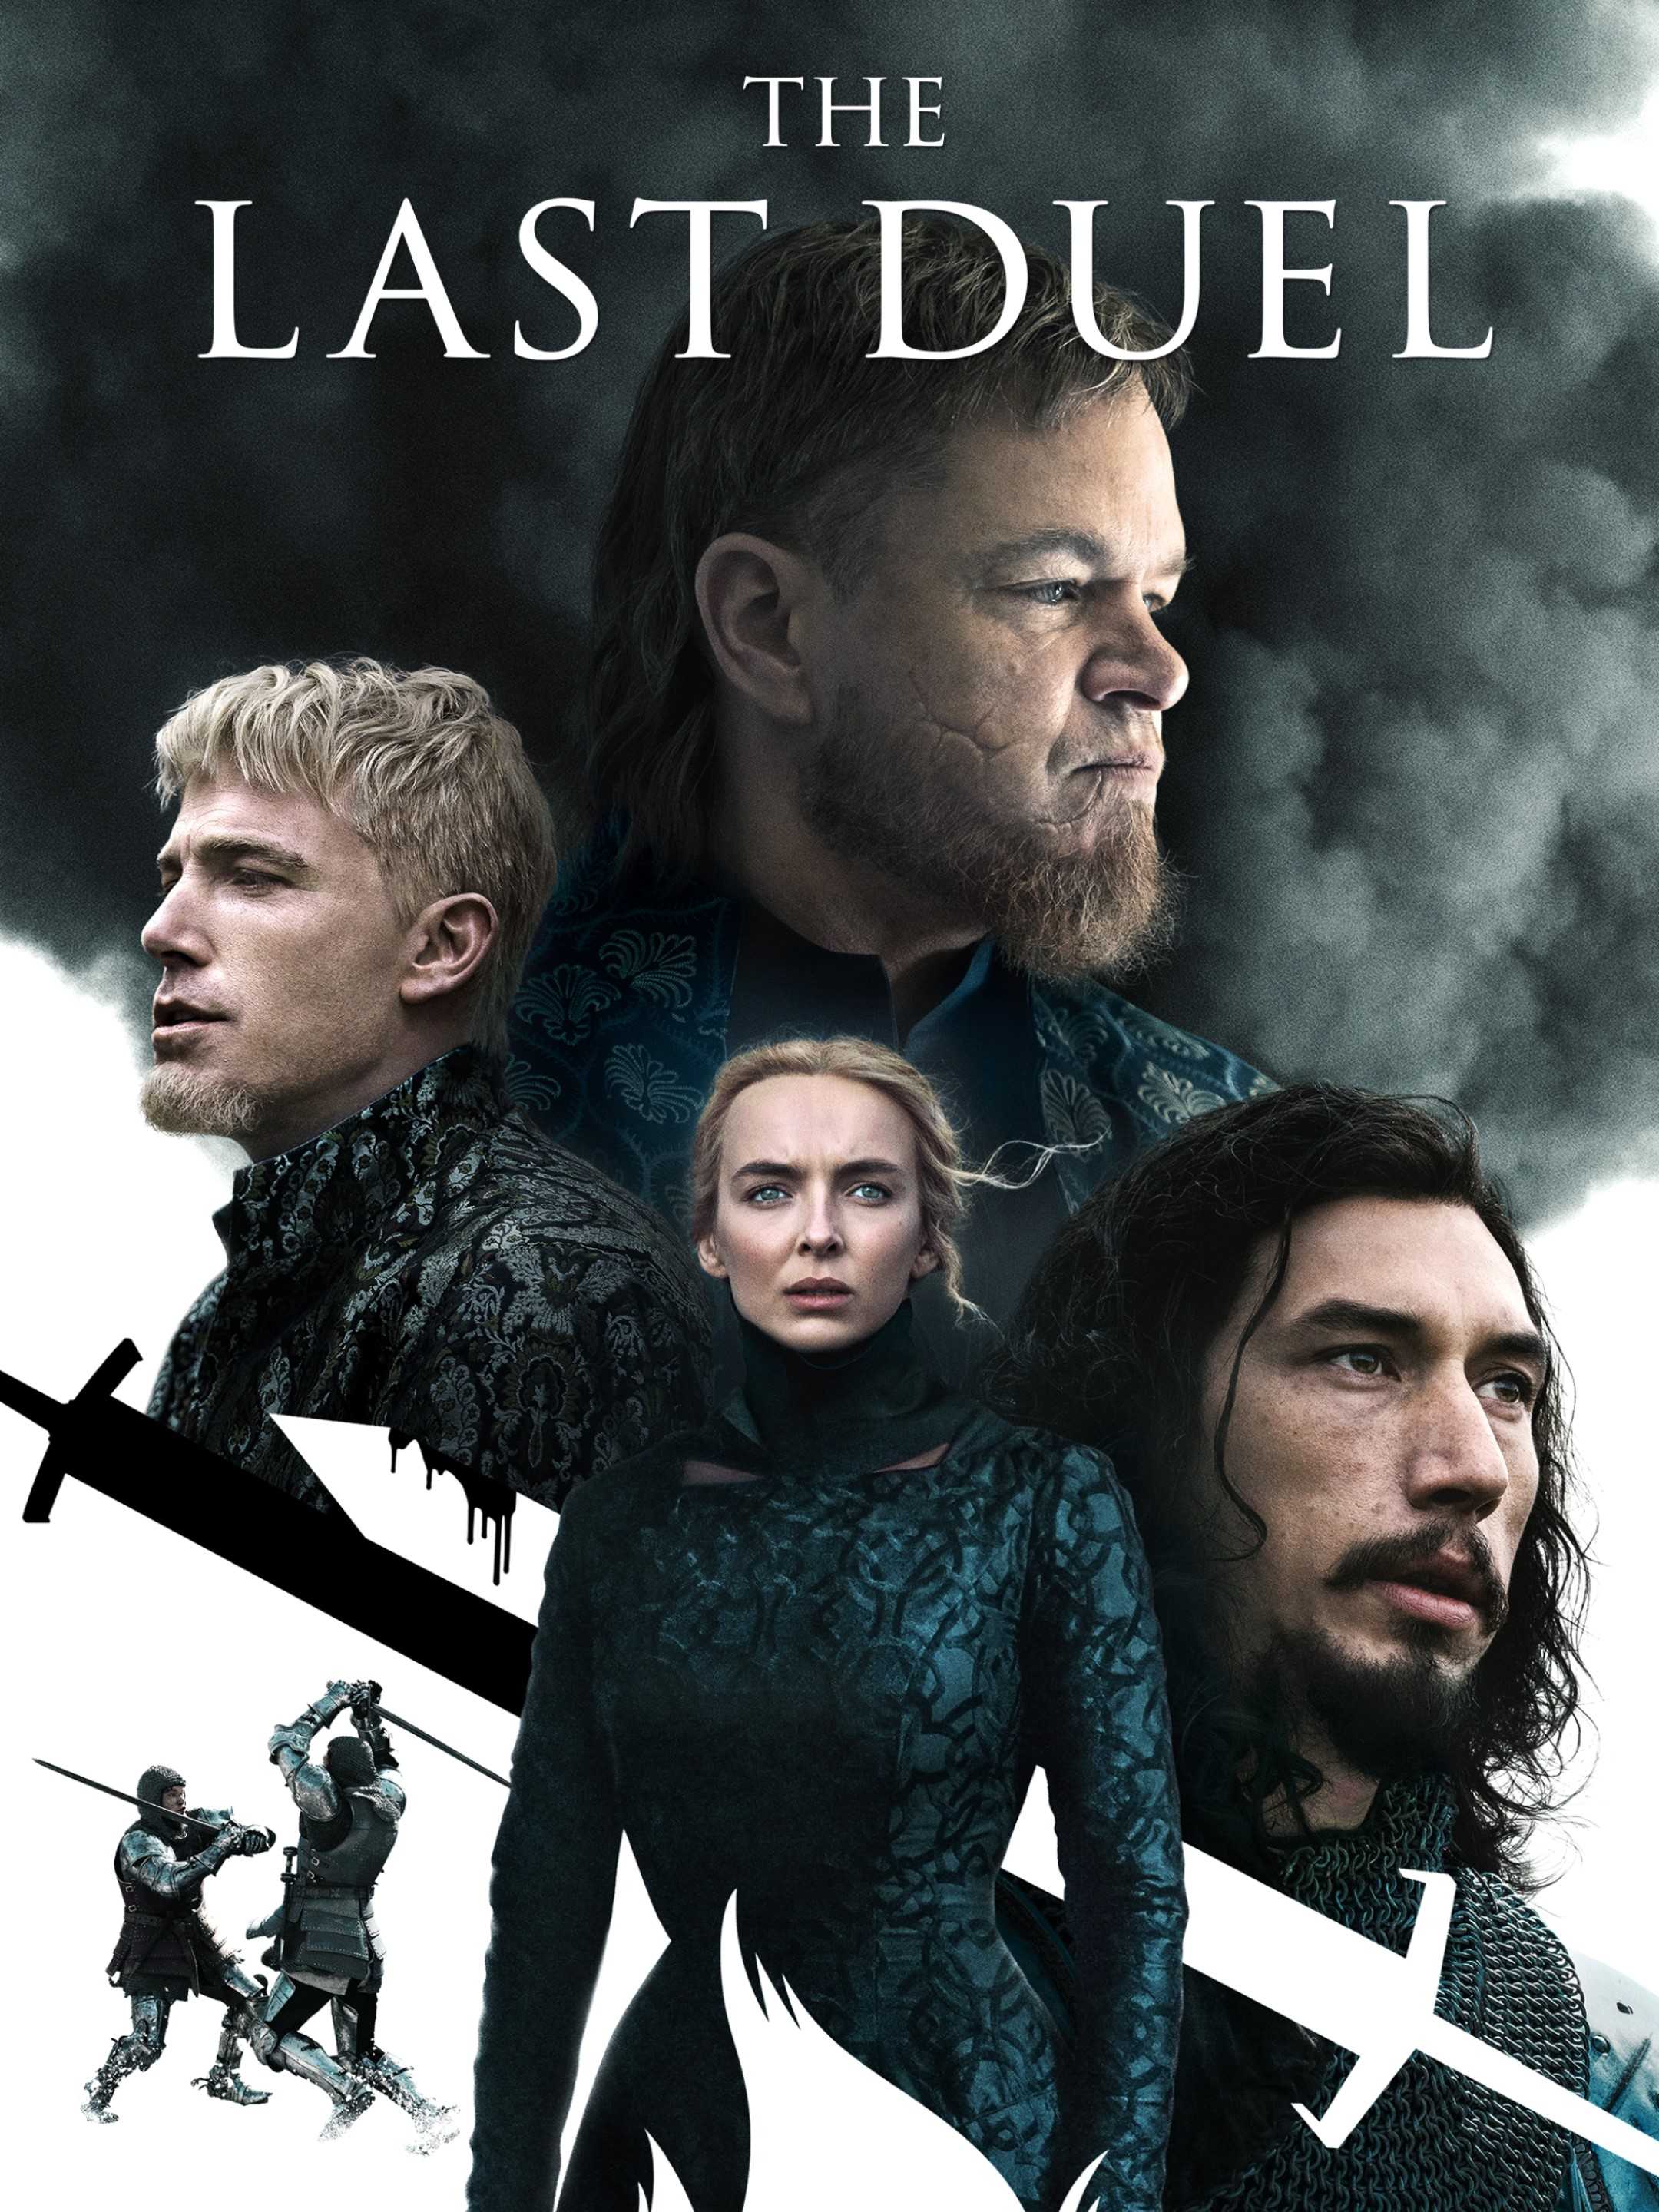 Is The Last Duel on Netflix?